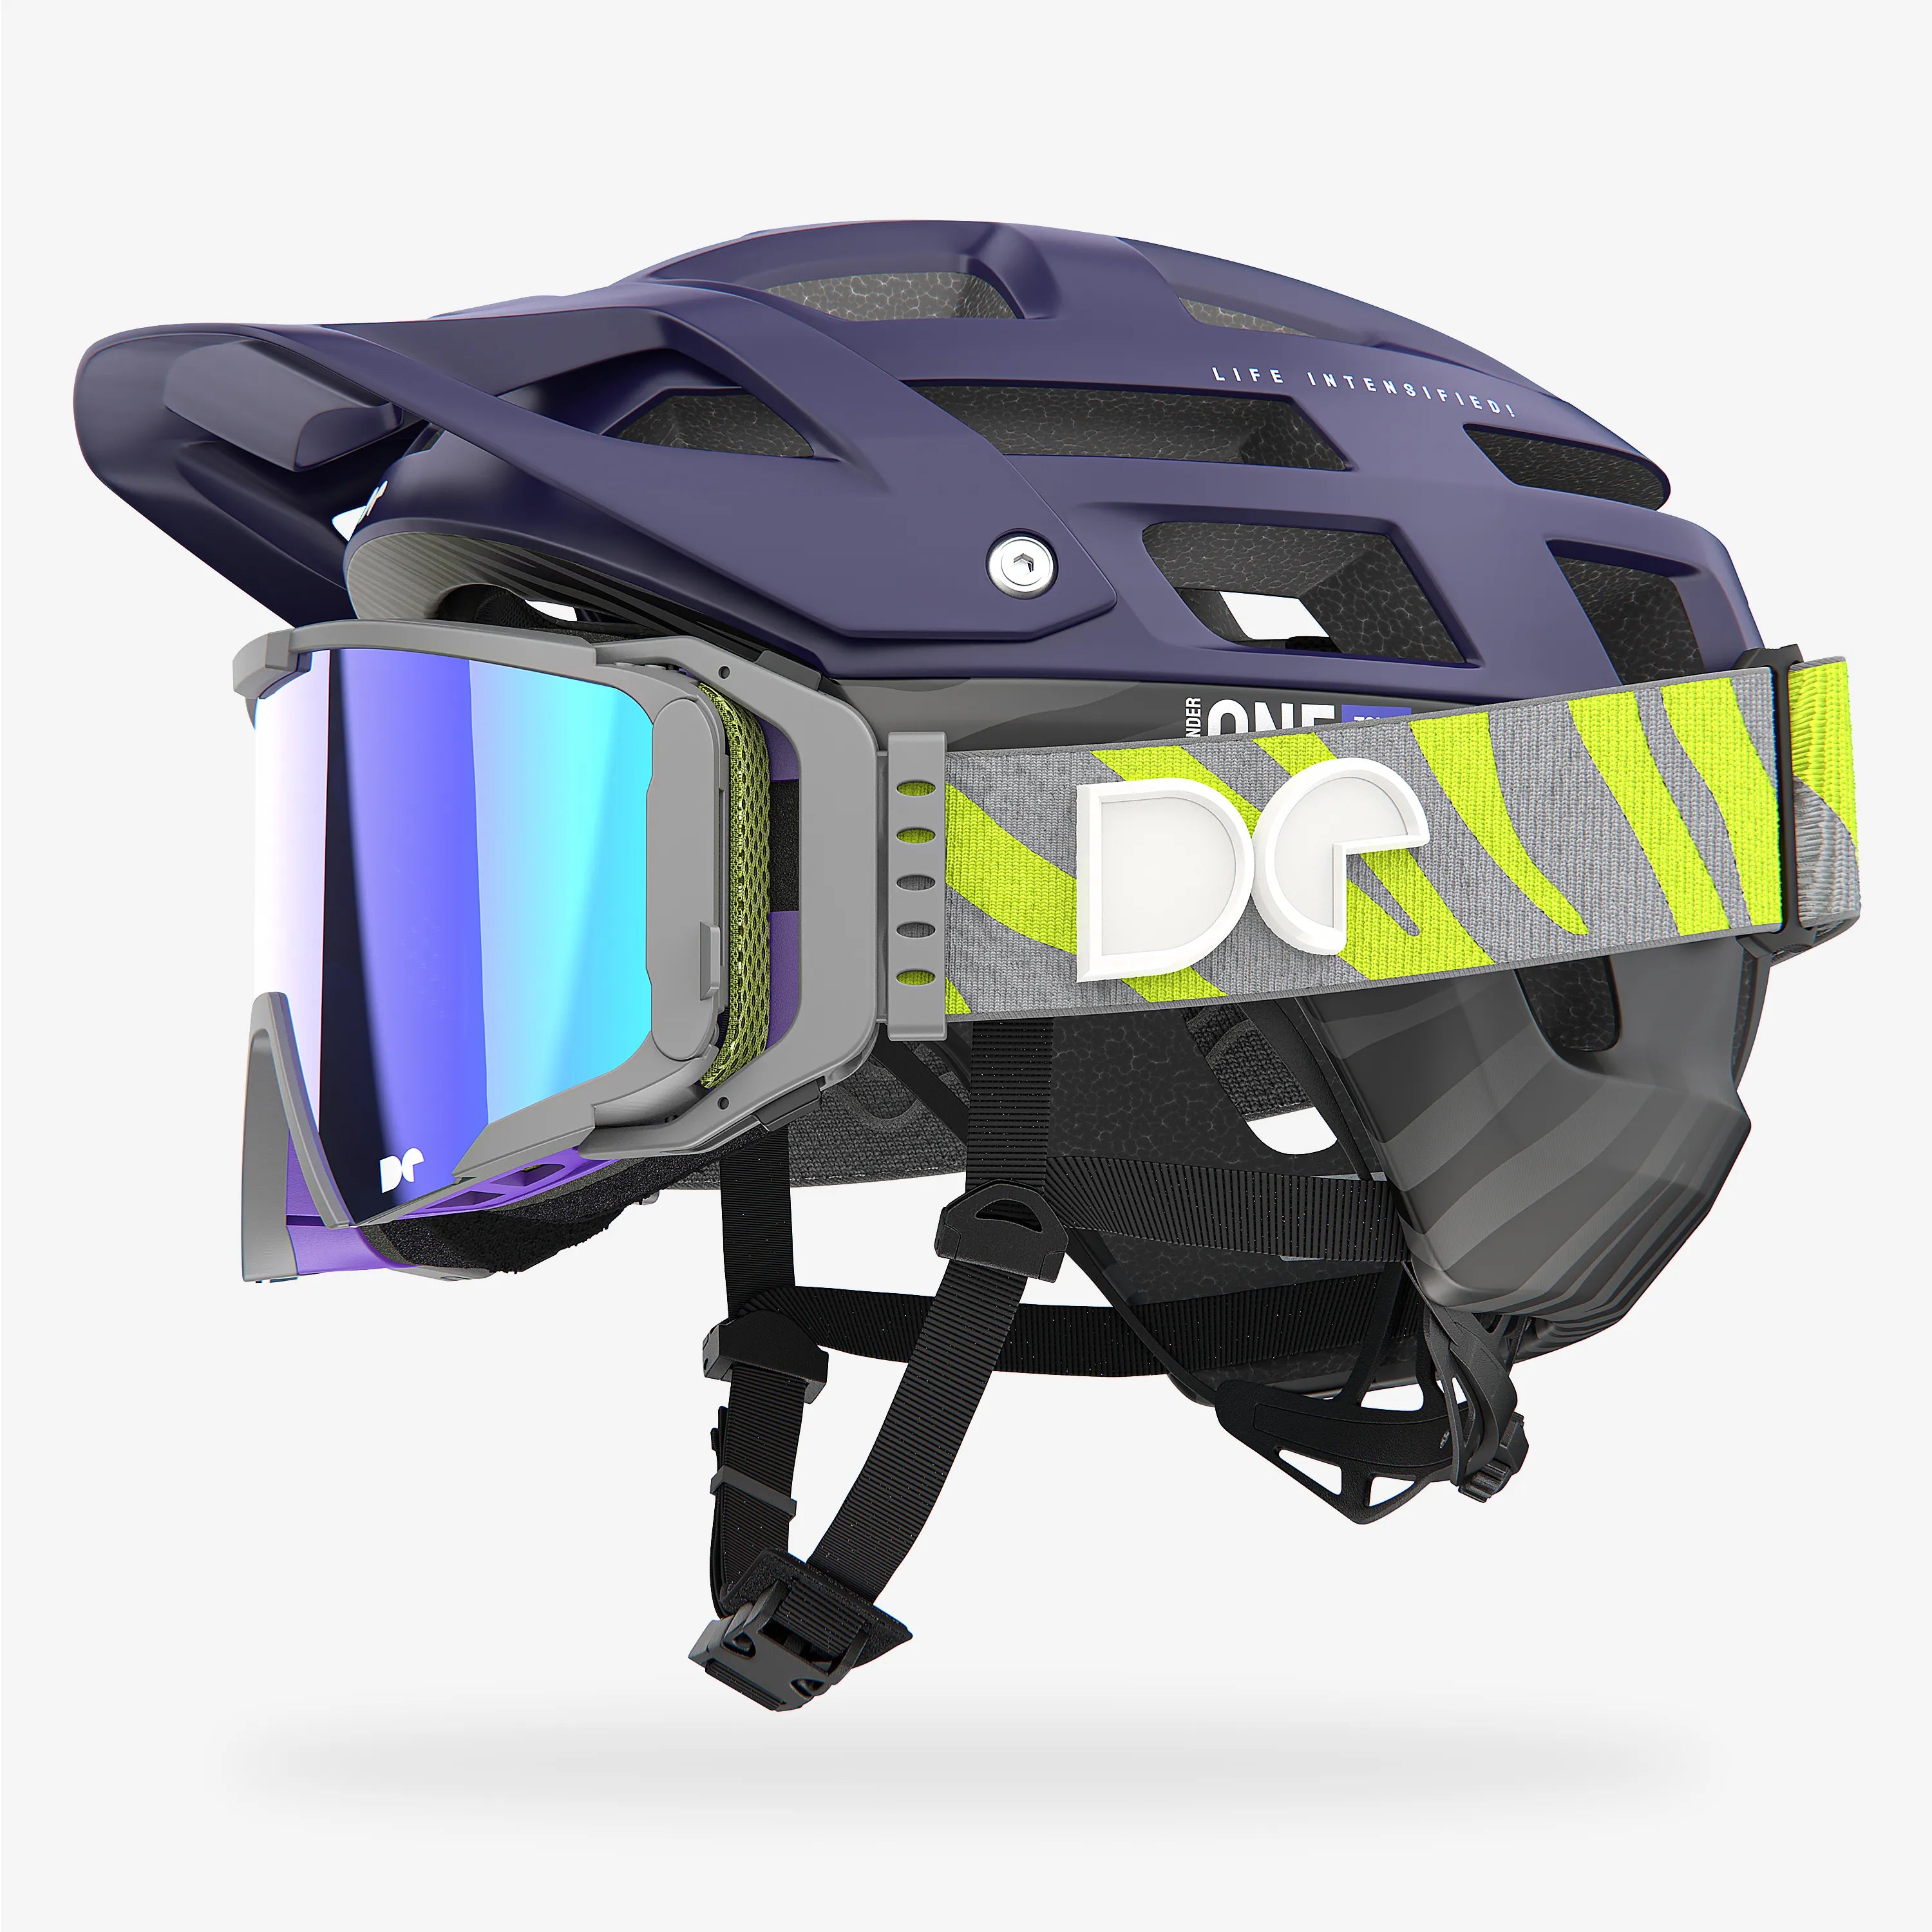 Defender One Tour Deep Purple Mountain Bike Helmet + Sporter Boostup All Road Goggle